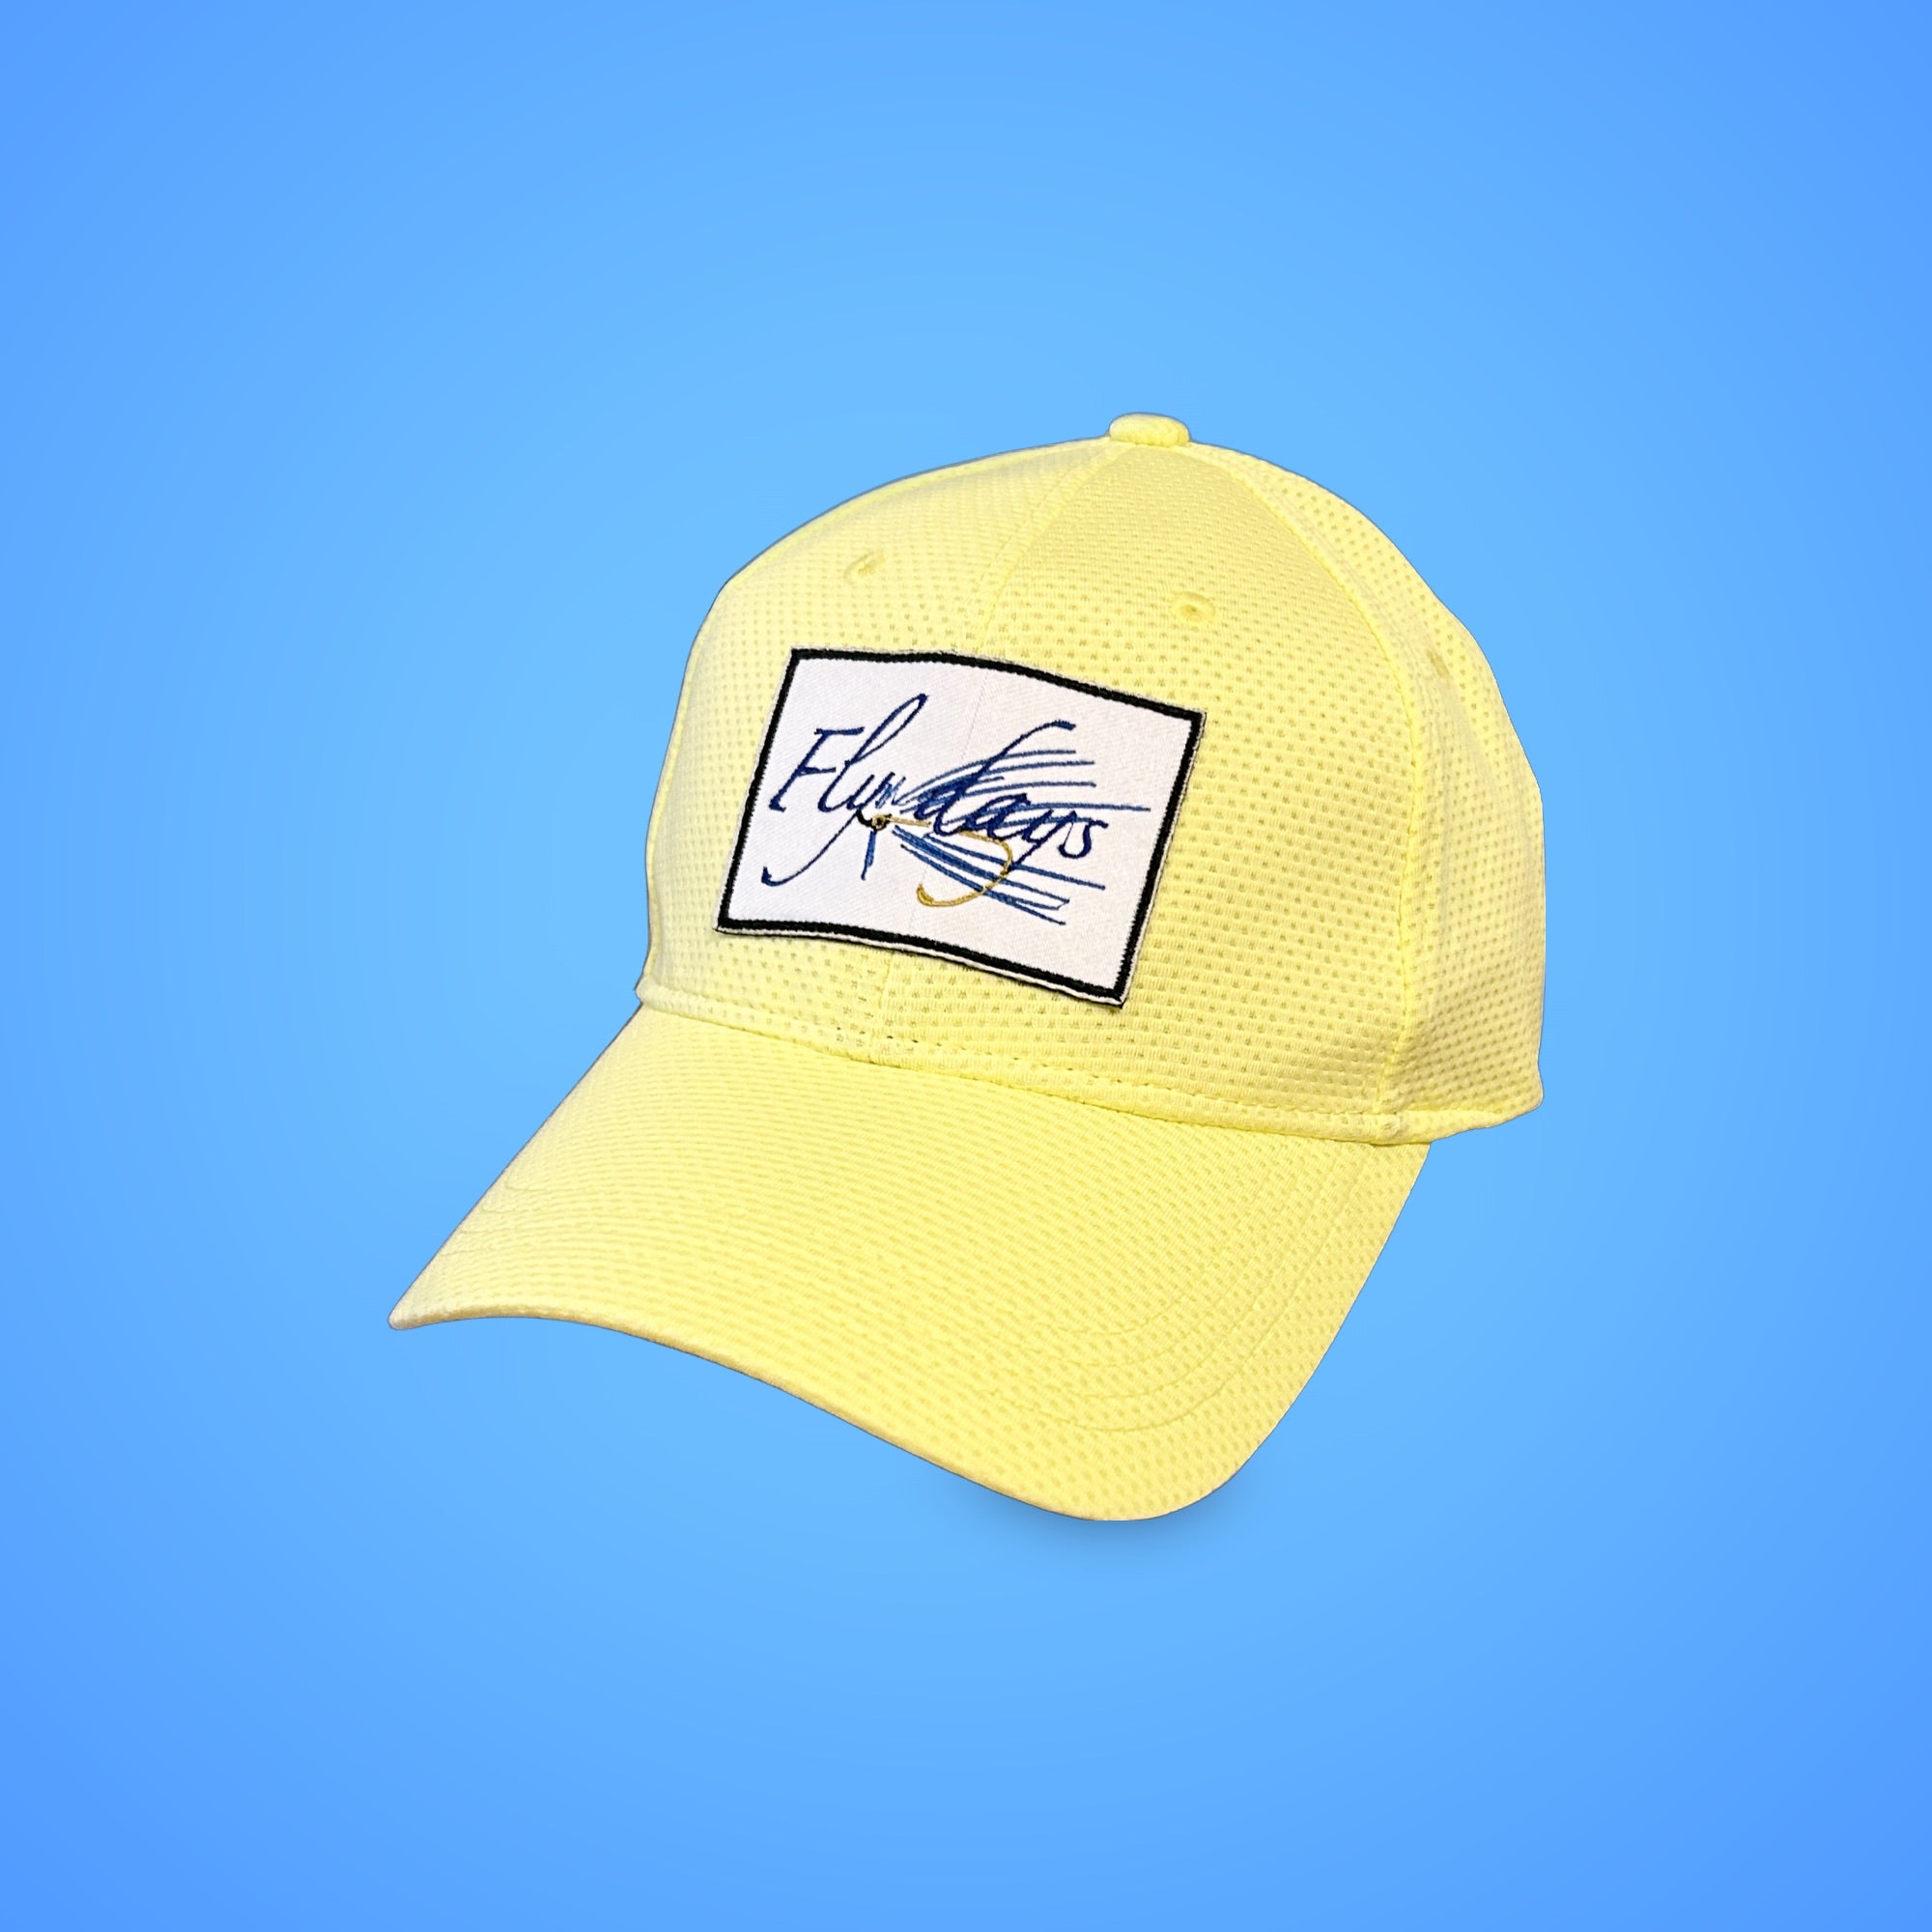 Flydays baseball style hat